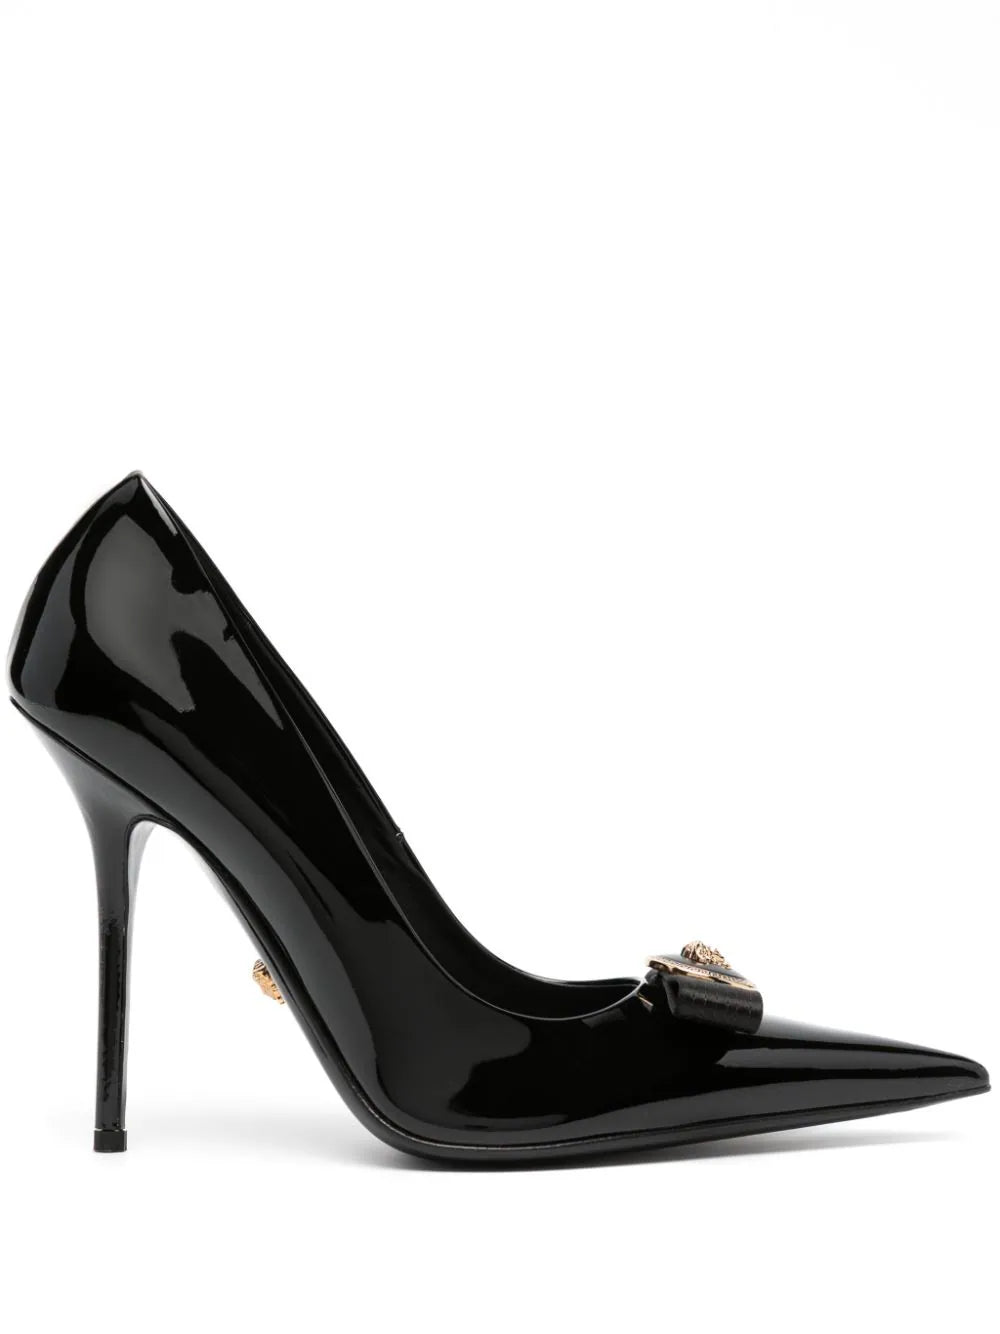 Black Satin pumps Versace - GenesinlifeShops Seychelles - alaia asym suede  ankle boots